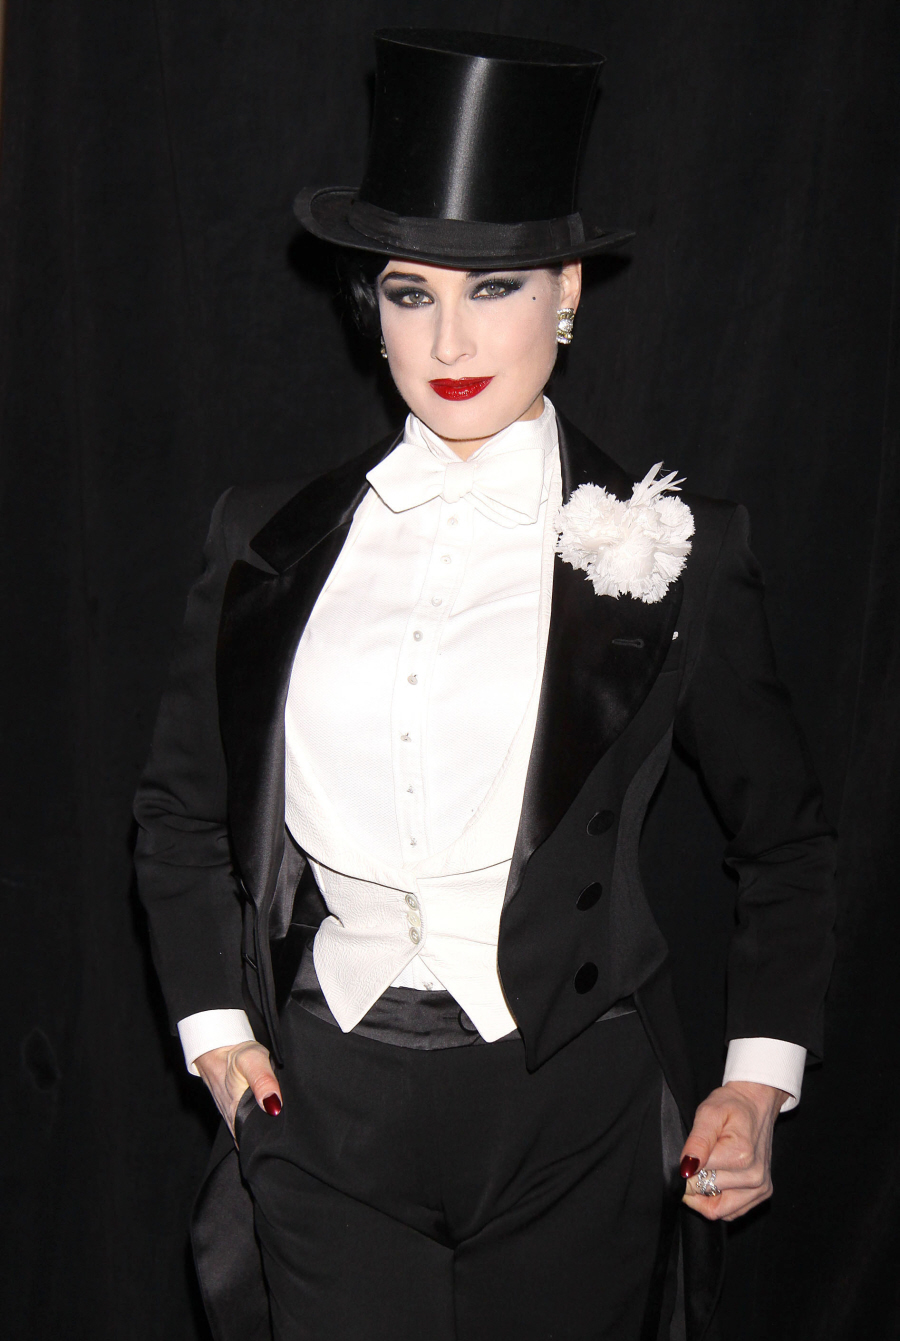 Dita Von Teese Brings Glamour to Las Vegas in Black Dress & Louboutins